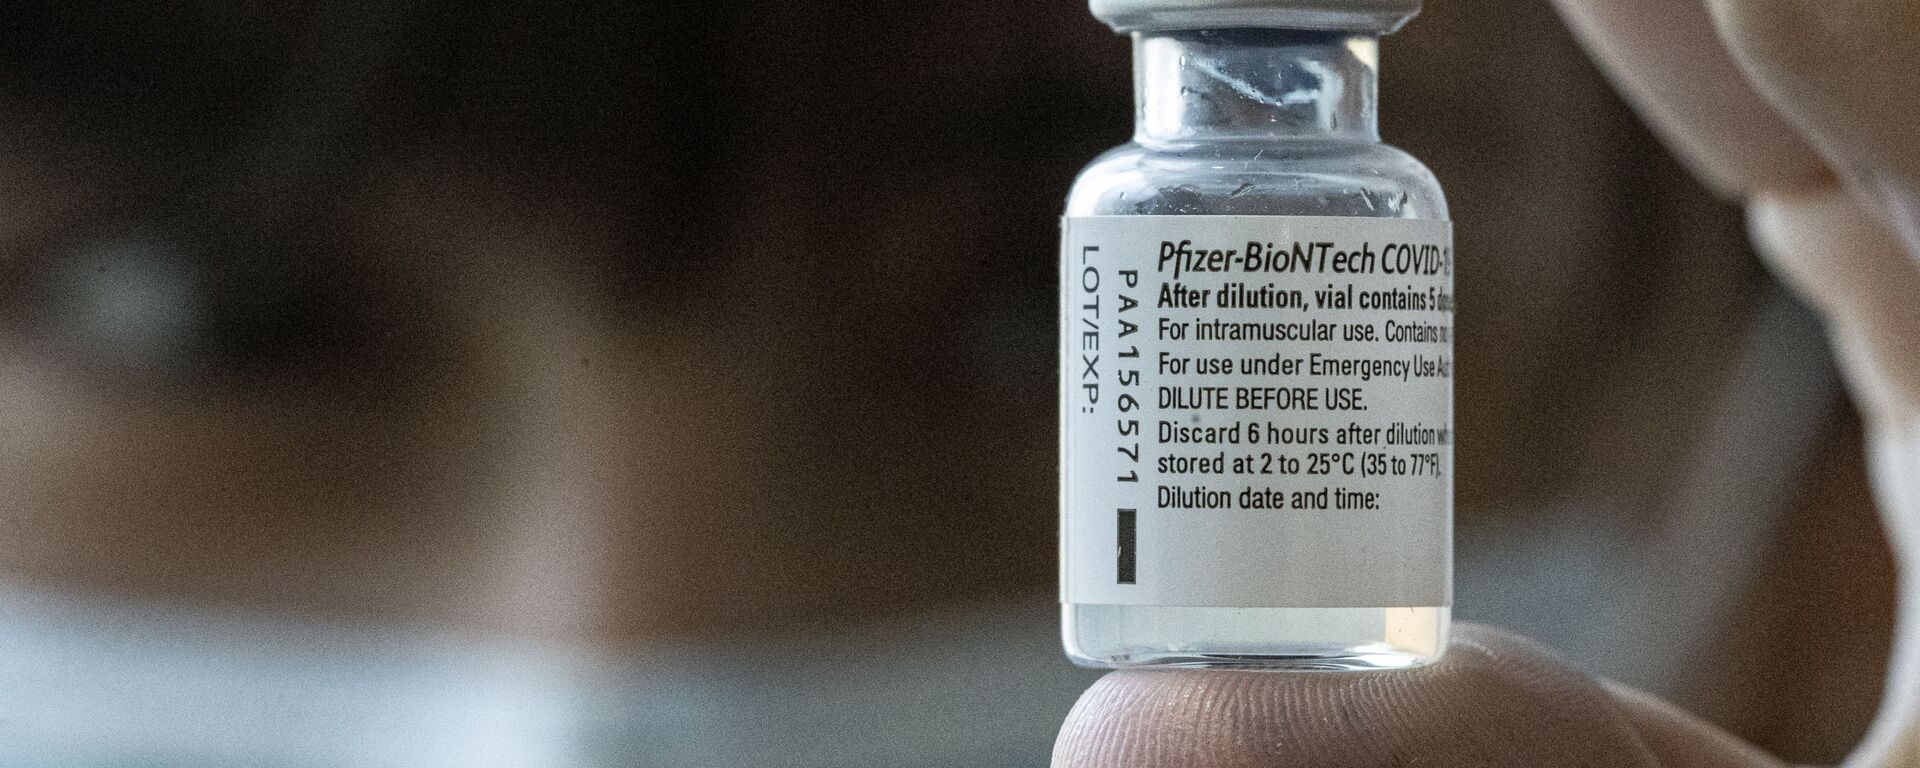 La vacuna Pfizer-BioNTech contra el COVID-19 - Sputnik Mundo, 1920, 08.02.2021